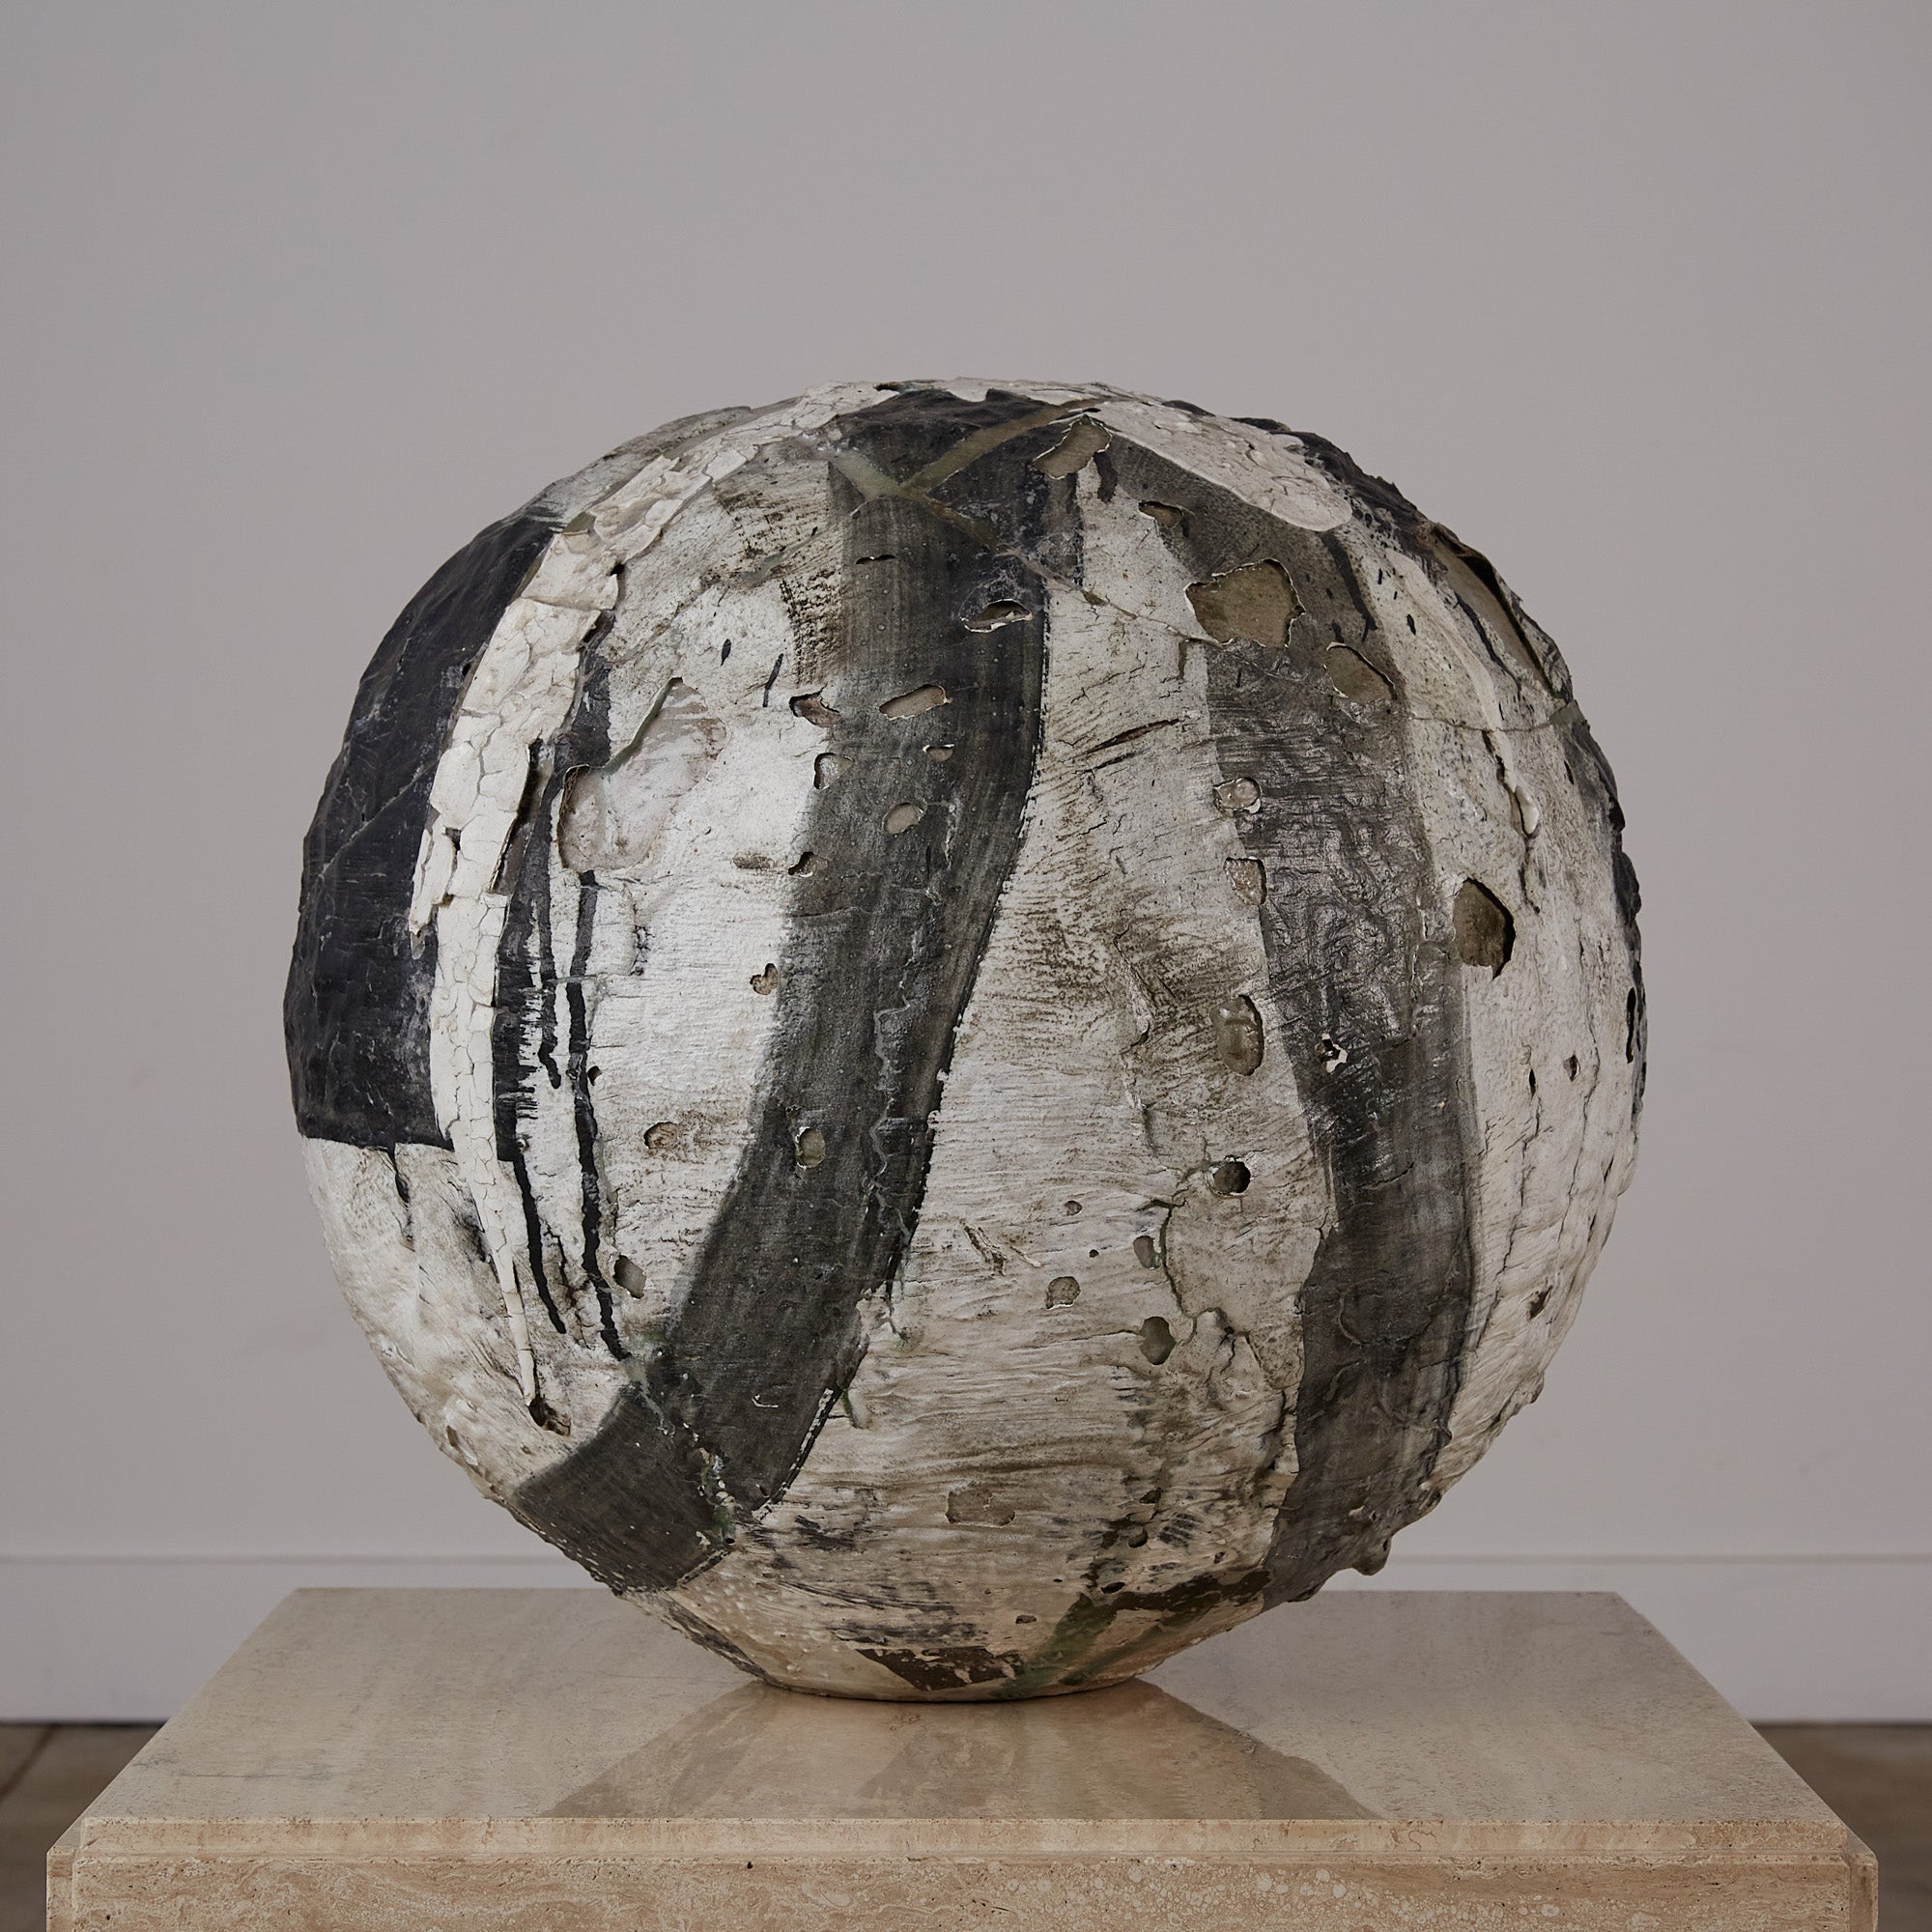 Monochromatic Sphere by Darcy Badiali